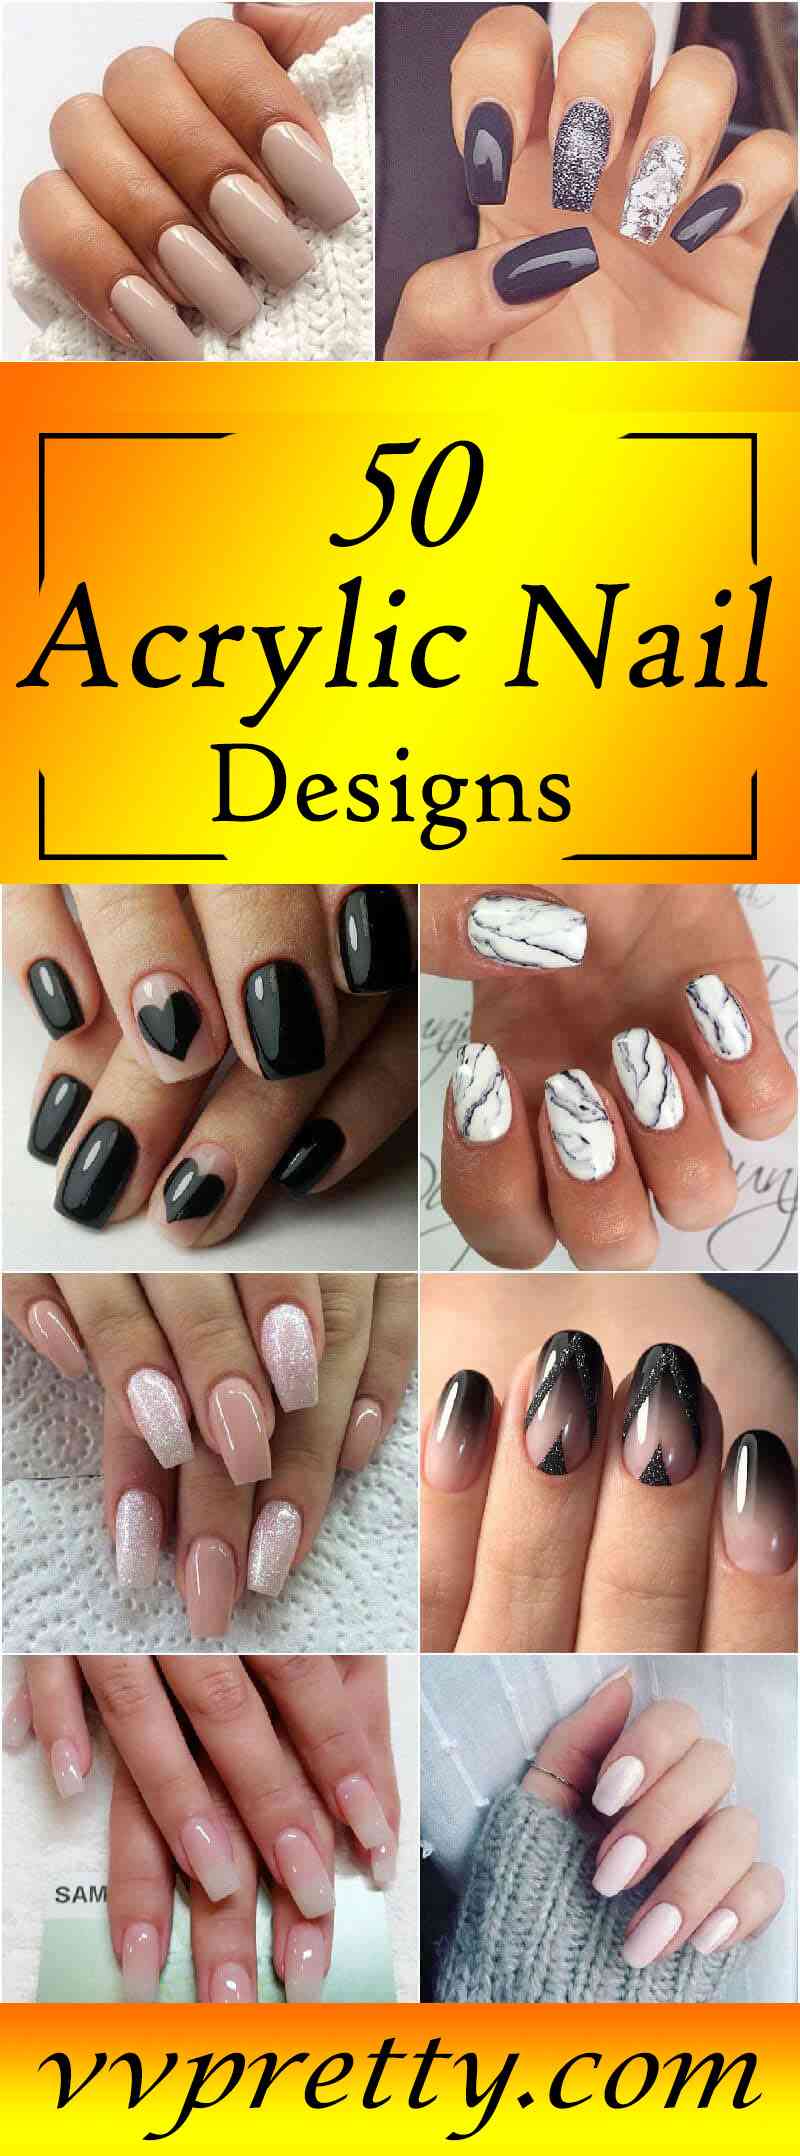 Acrylic Nail design ideas